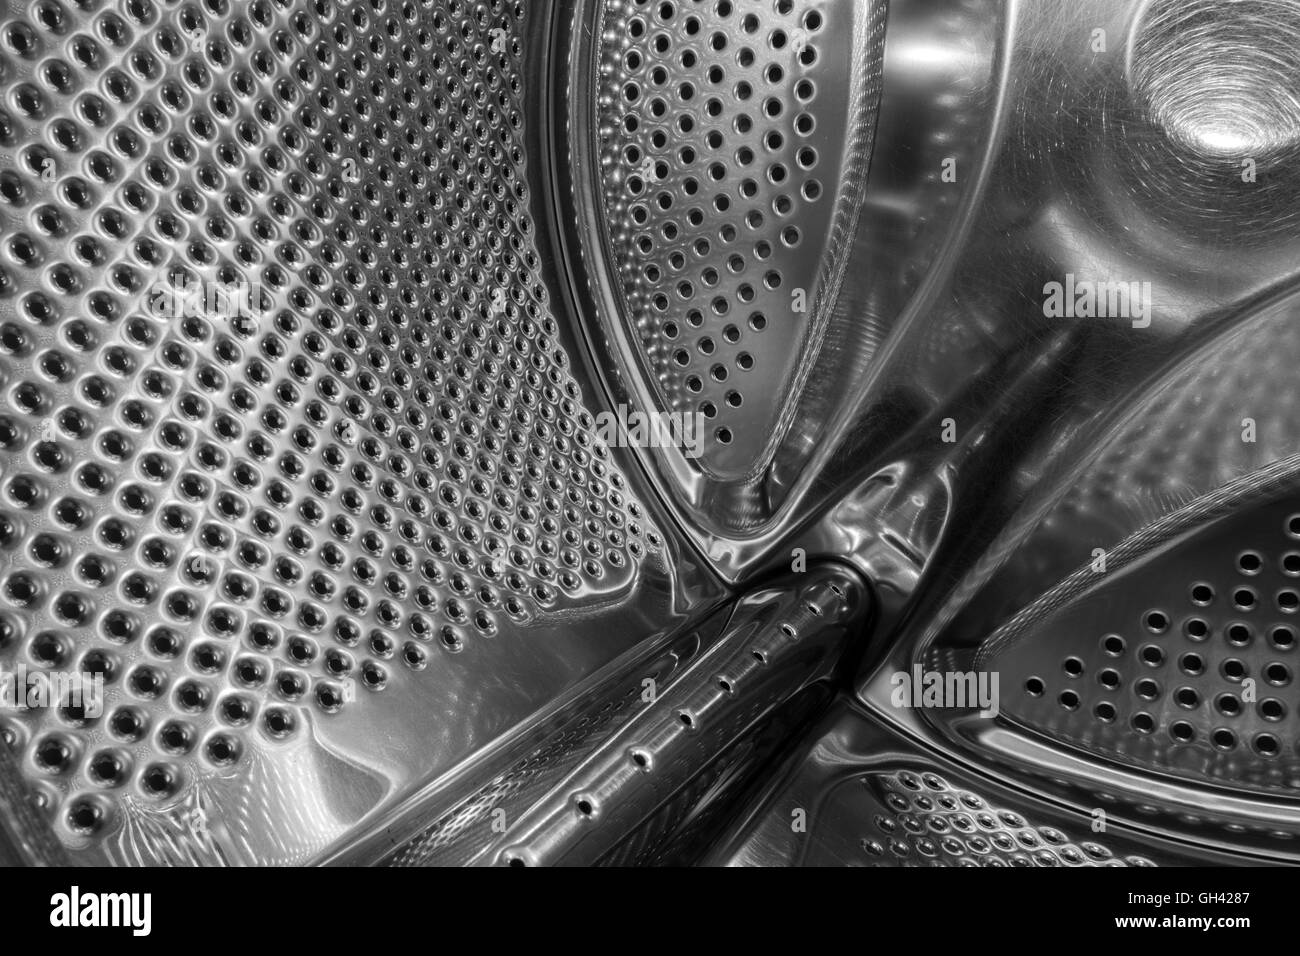 Waschmaschine Trommel Stockfoto